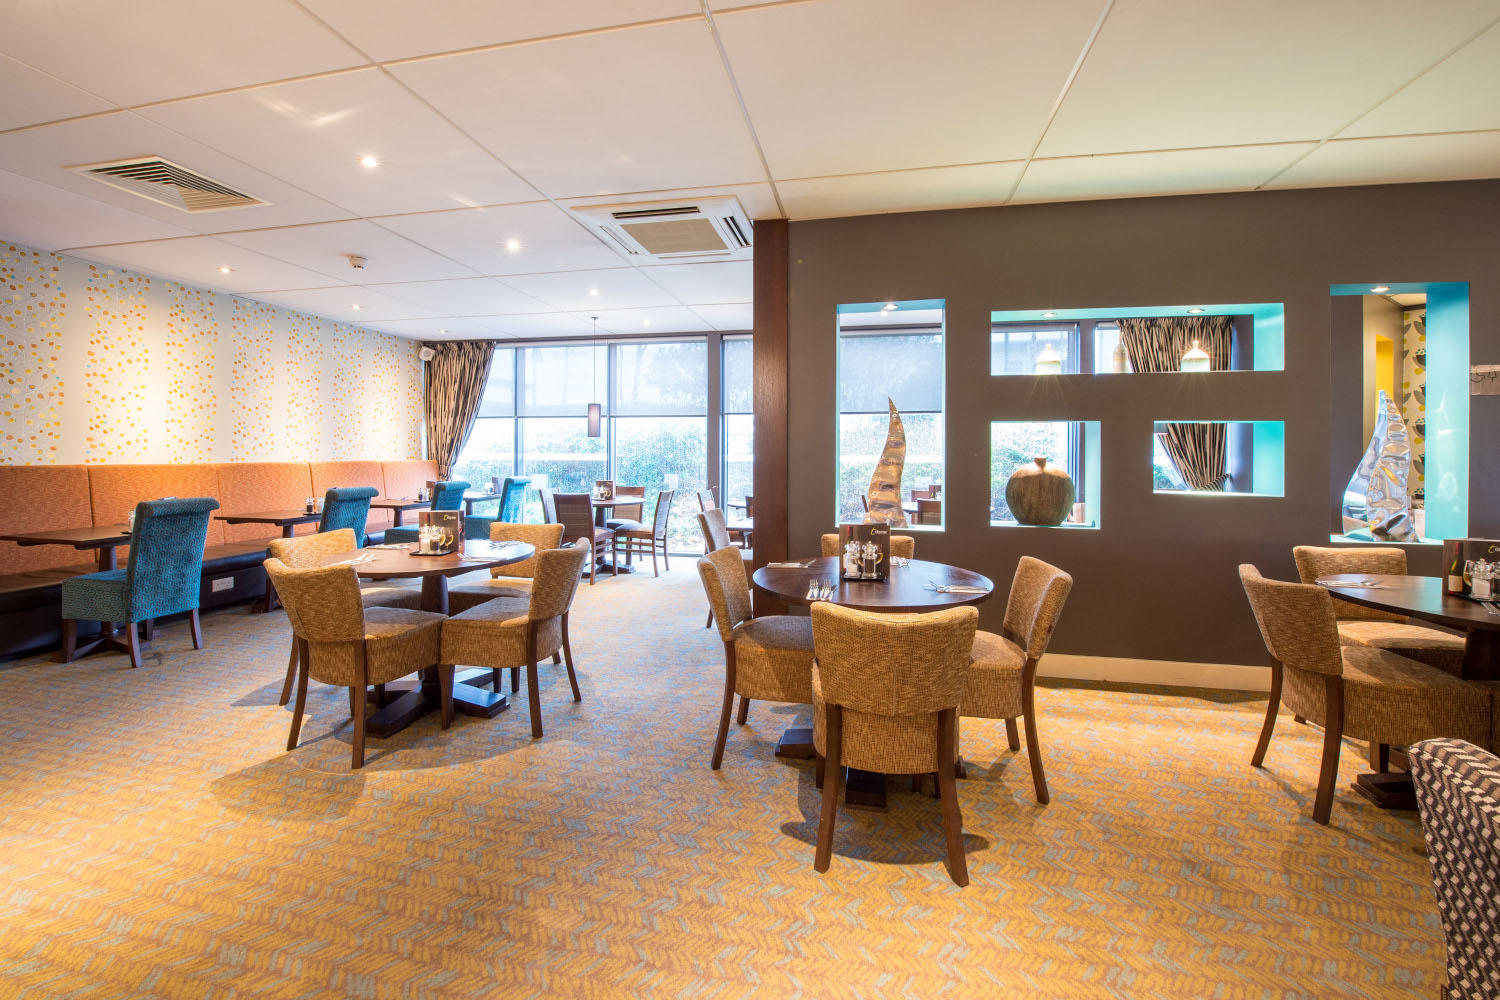 Thyme restaurant interior Premier Inn Portsmouth (Port Solent) hotel Portsmouth 03333 218334